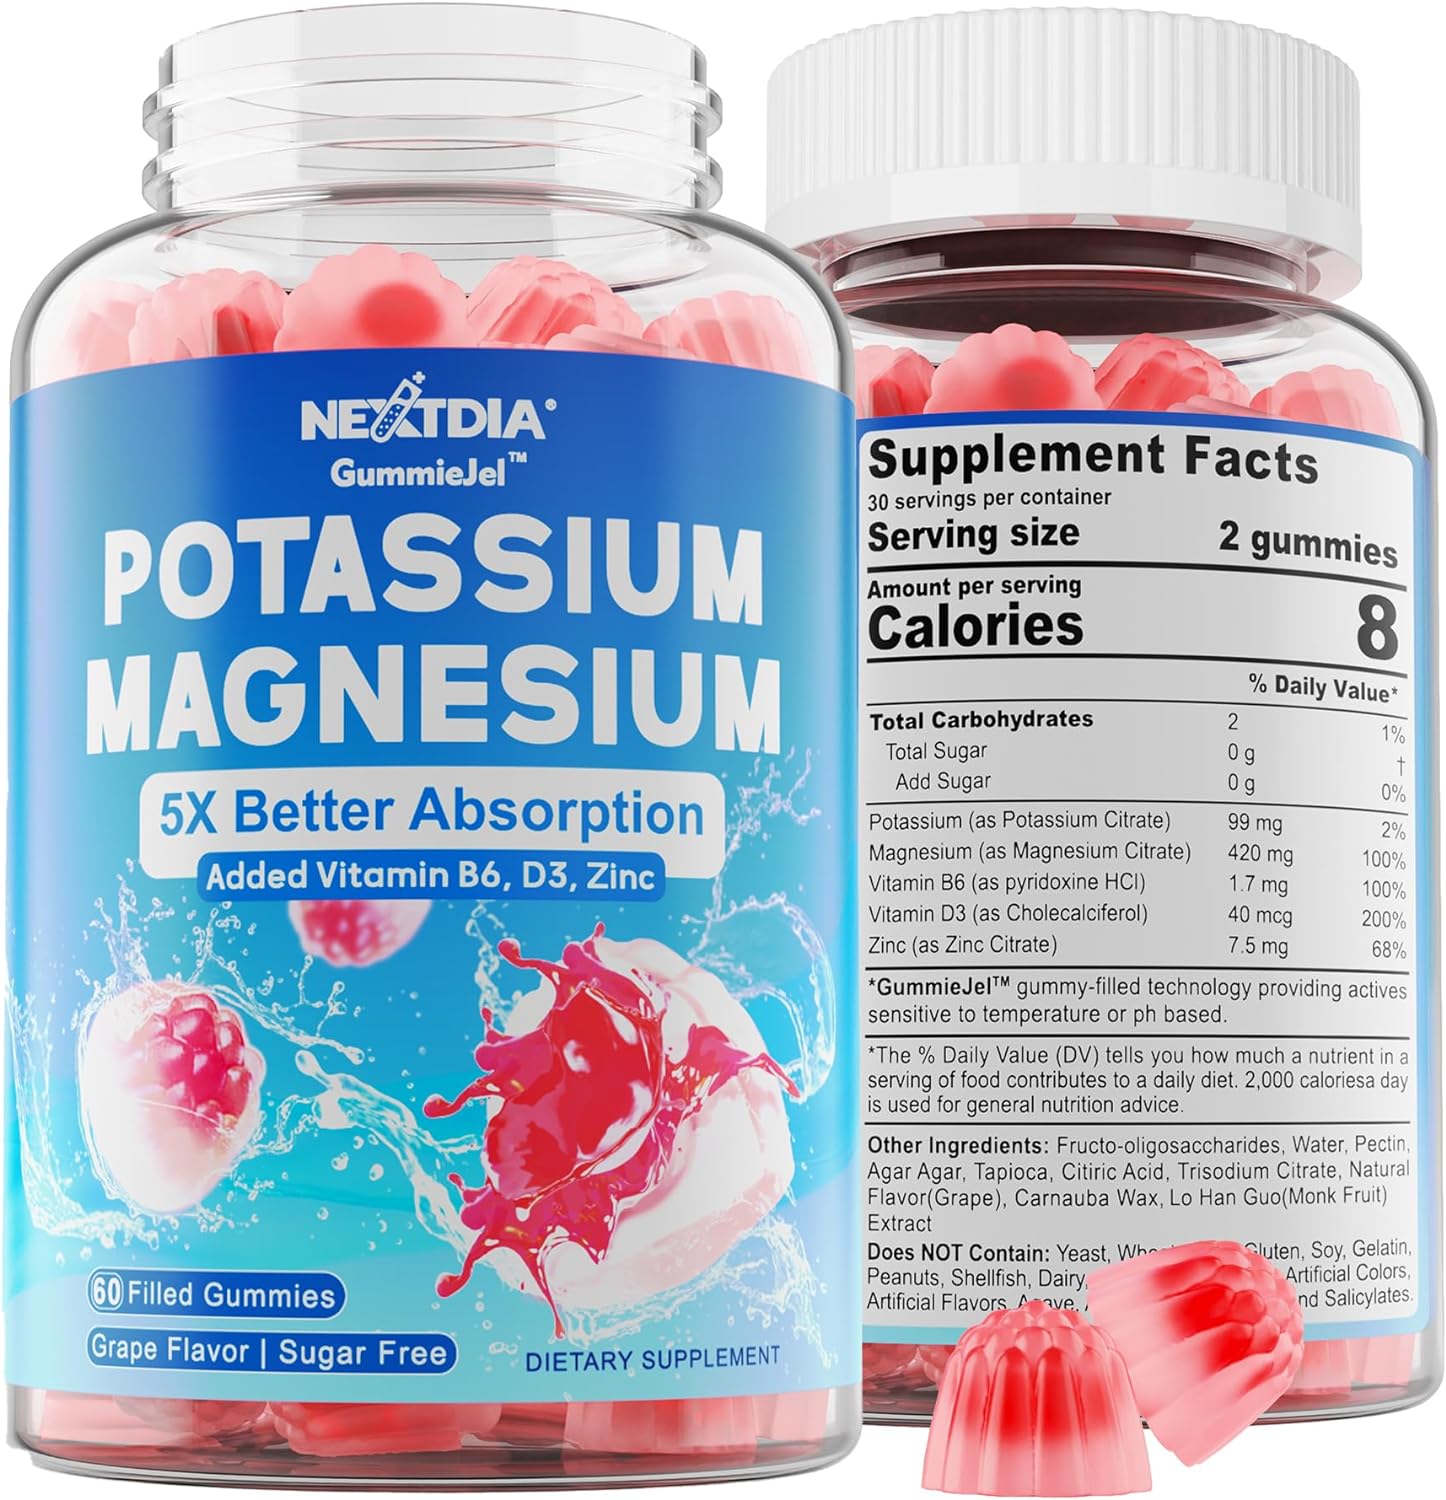 Sugar Free Potassium Magnesium Filled Gummies, 5x Better Absorption, Potassium Citrate 99mg Magnesium Citrate 420mg, D3, B6 & Zinc, for Leg Cramps & Muscle & Immune Health, Vegan, Grape Flavor, 1 Pack